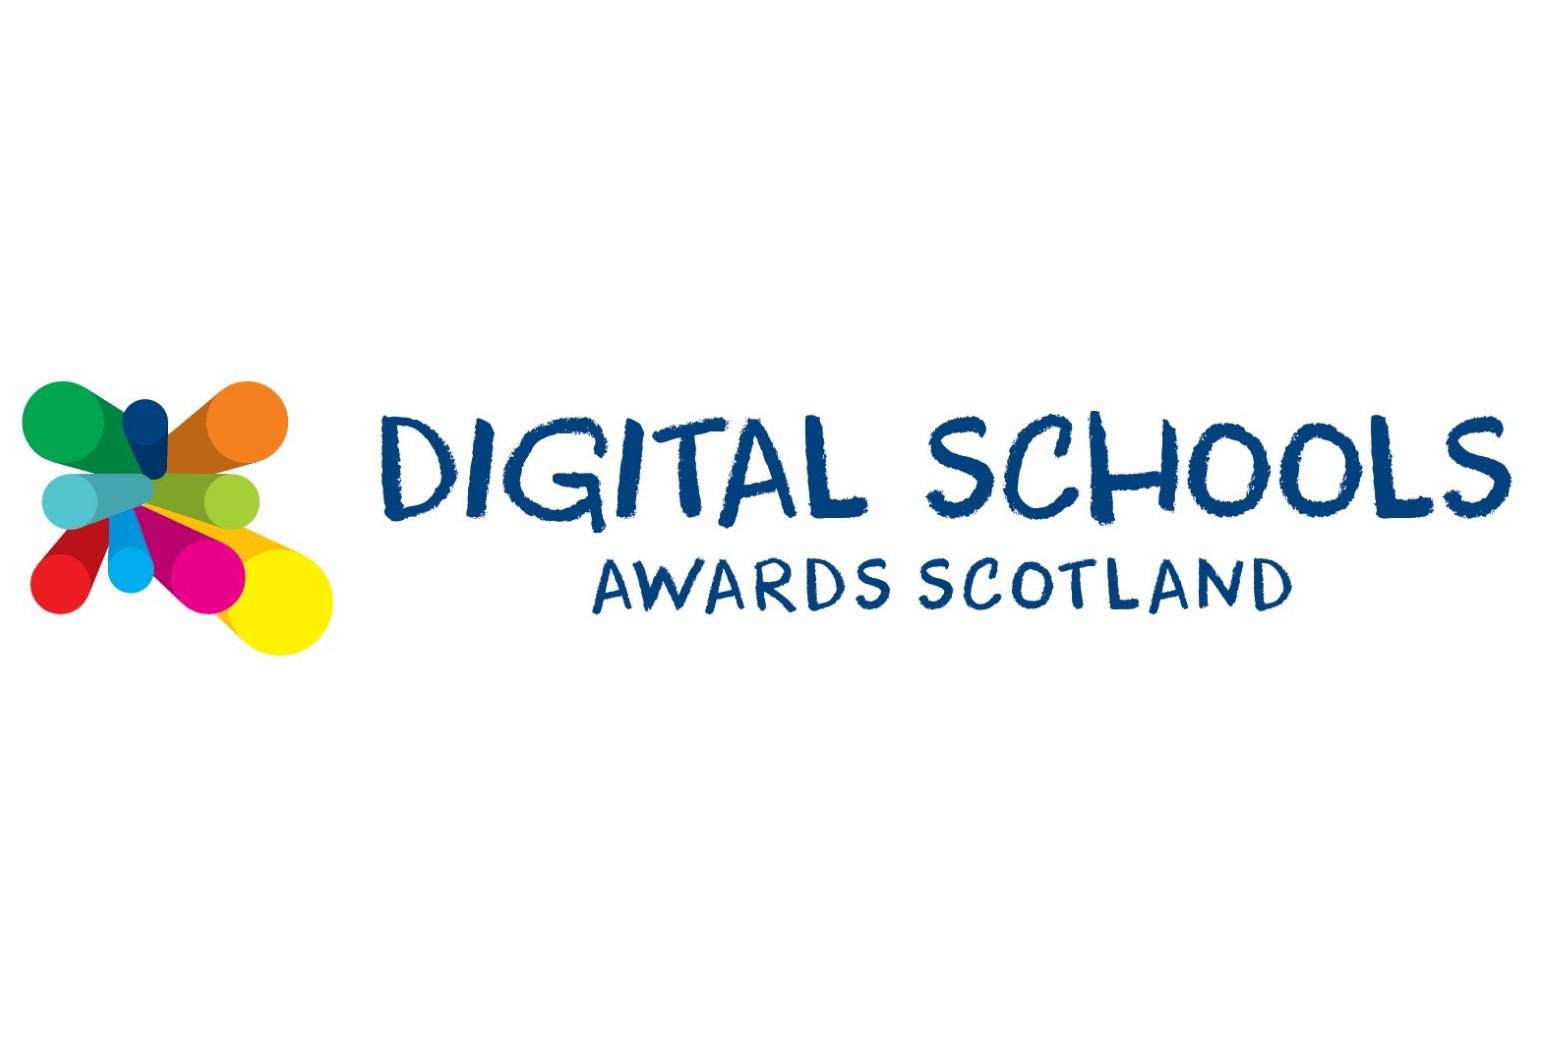 Burravoe Primary School recognised for digital skills – Shetland Islands  Council